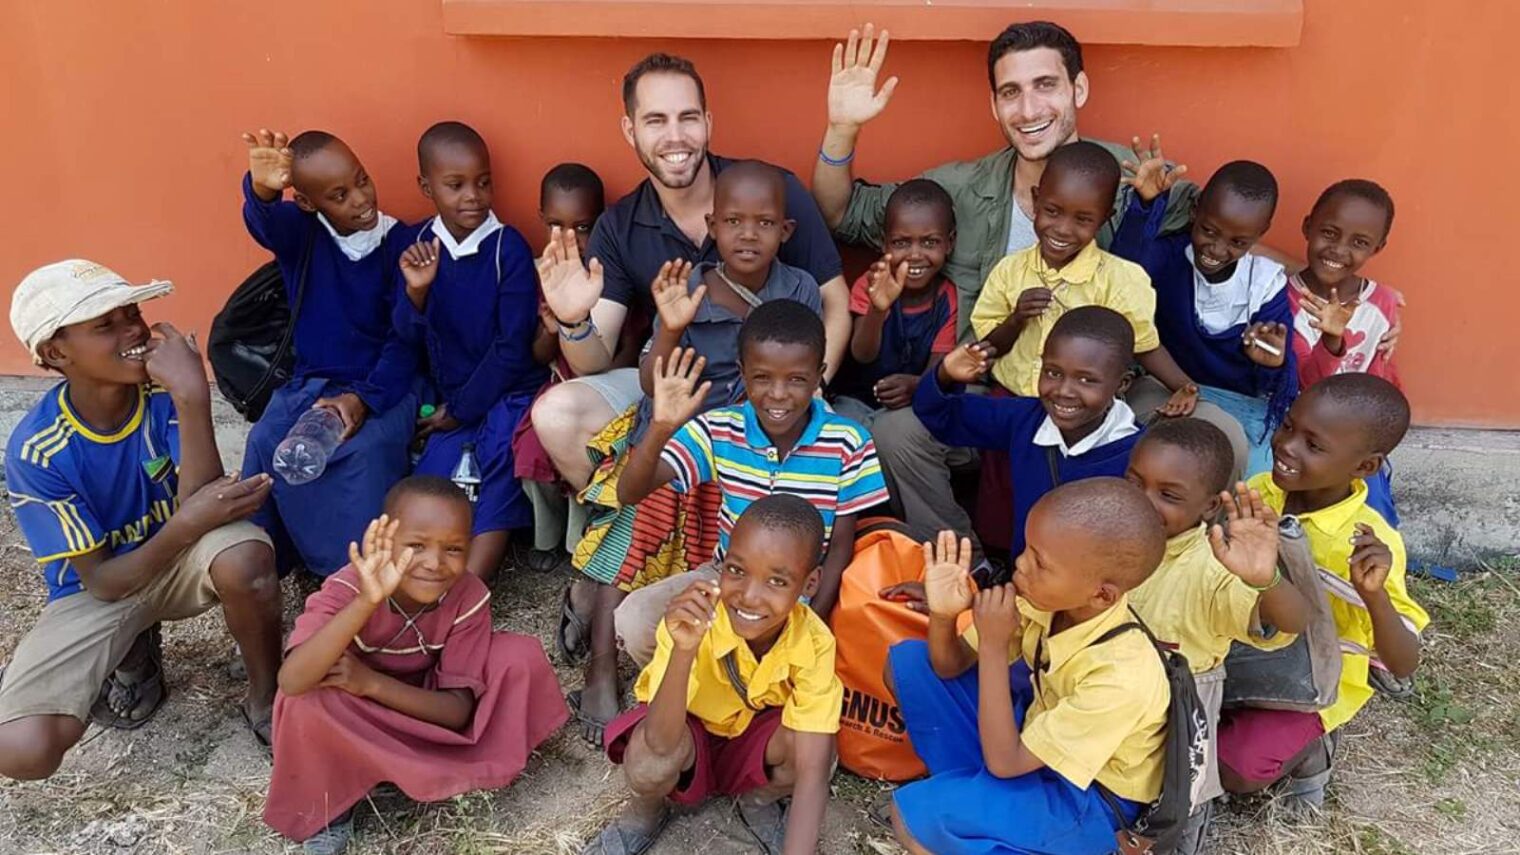 EwB TAU students Imry Atzmon, left, and Adir Shaham with schoolchildren in Minjingu, Tanzania, October 2016. Photo via Facebook